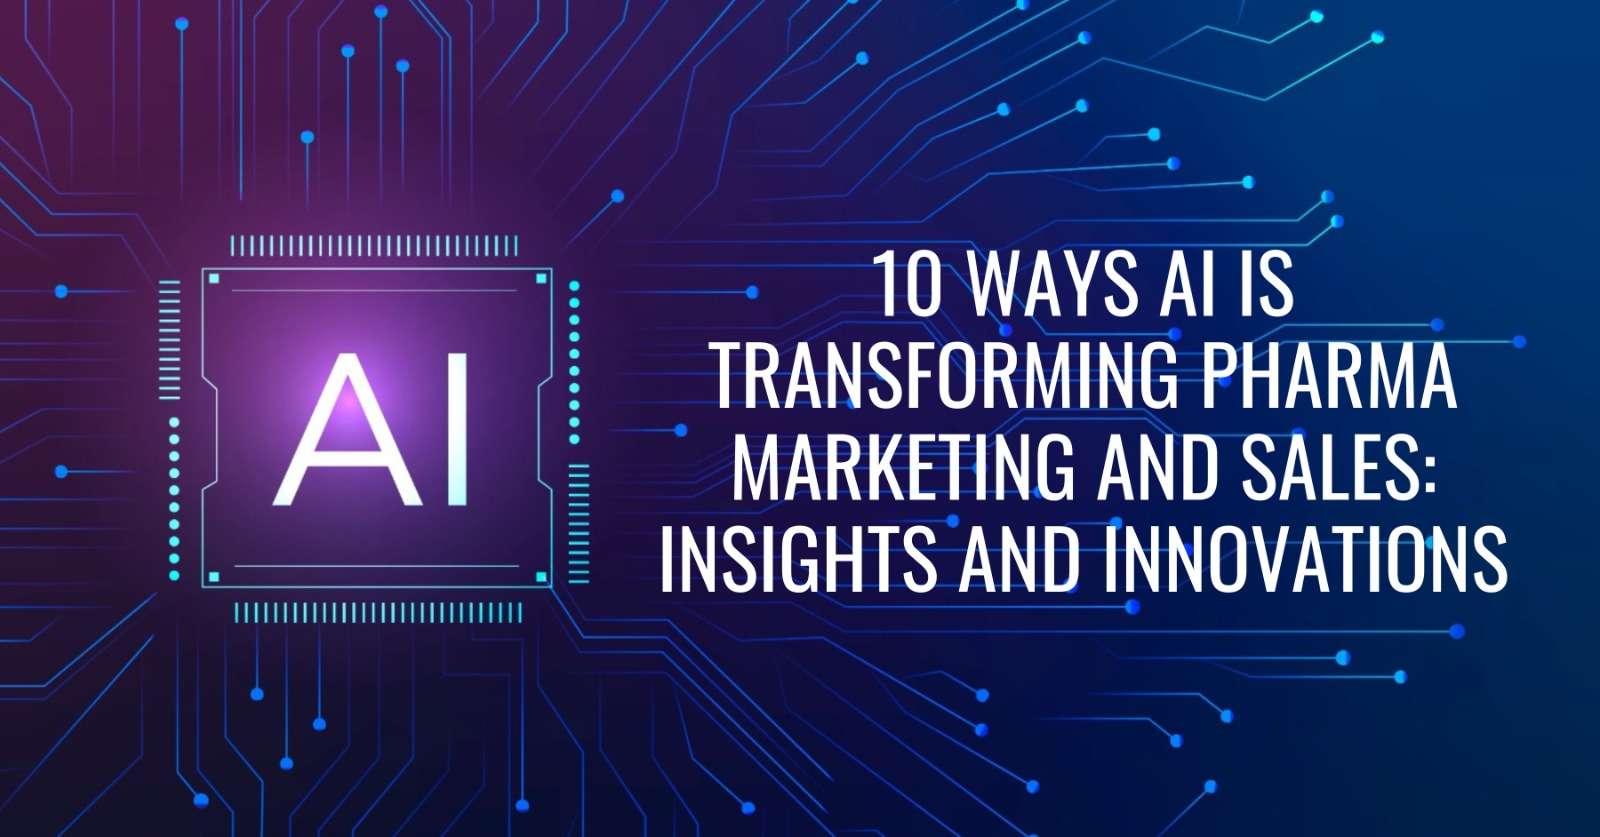 10 Ways AI is Transforming Pharma Marketing and Sales